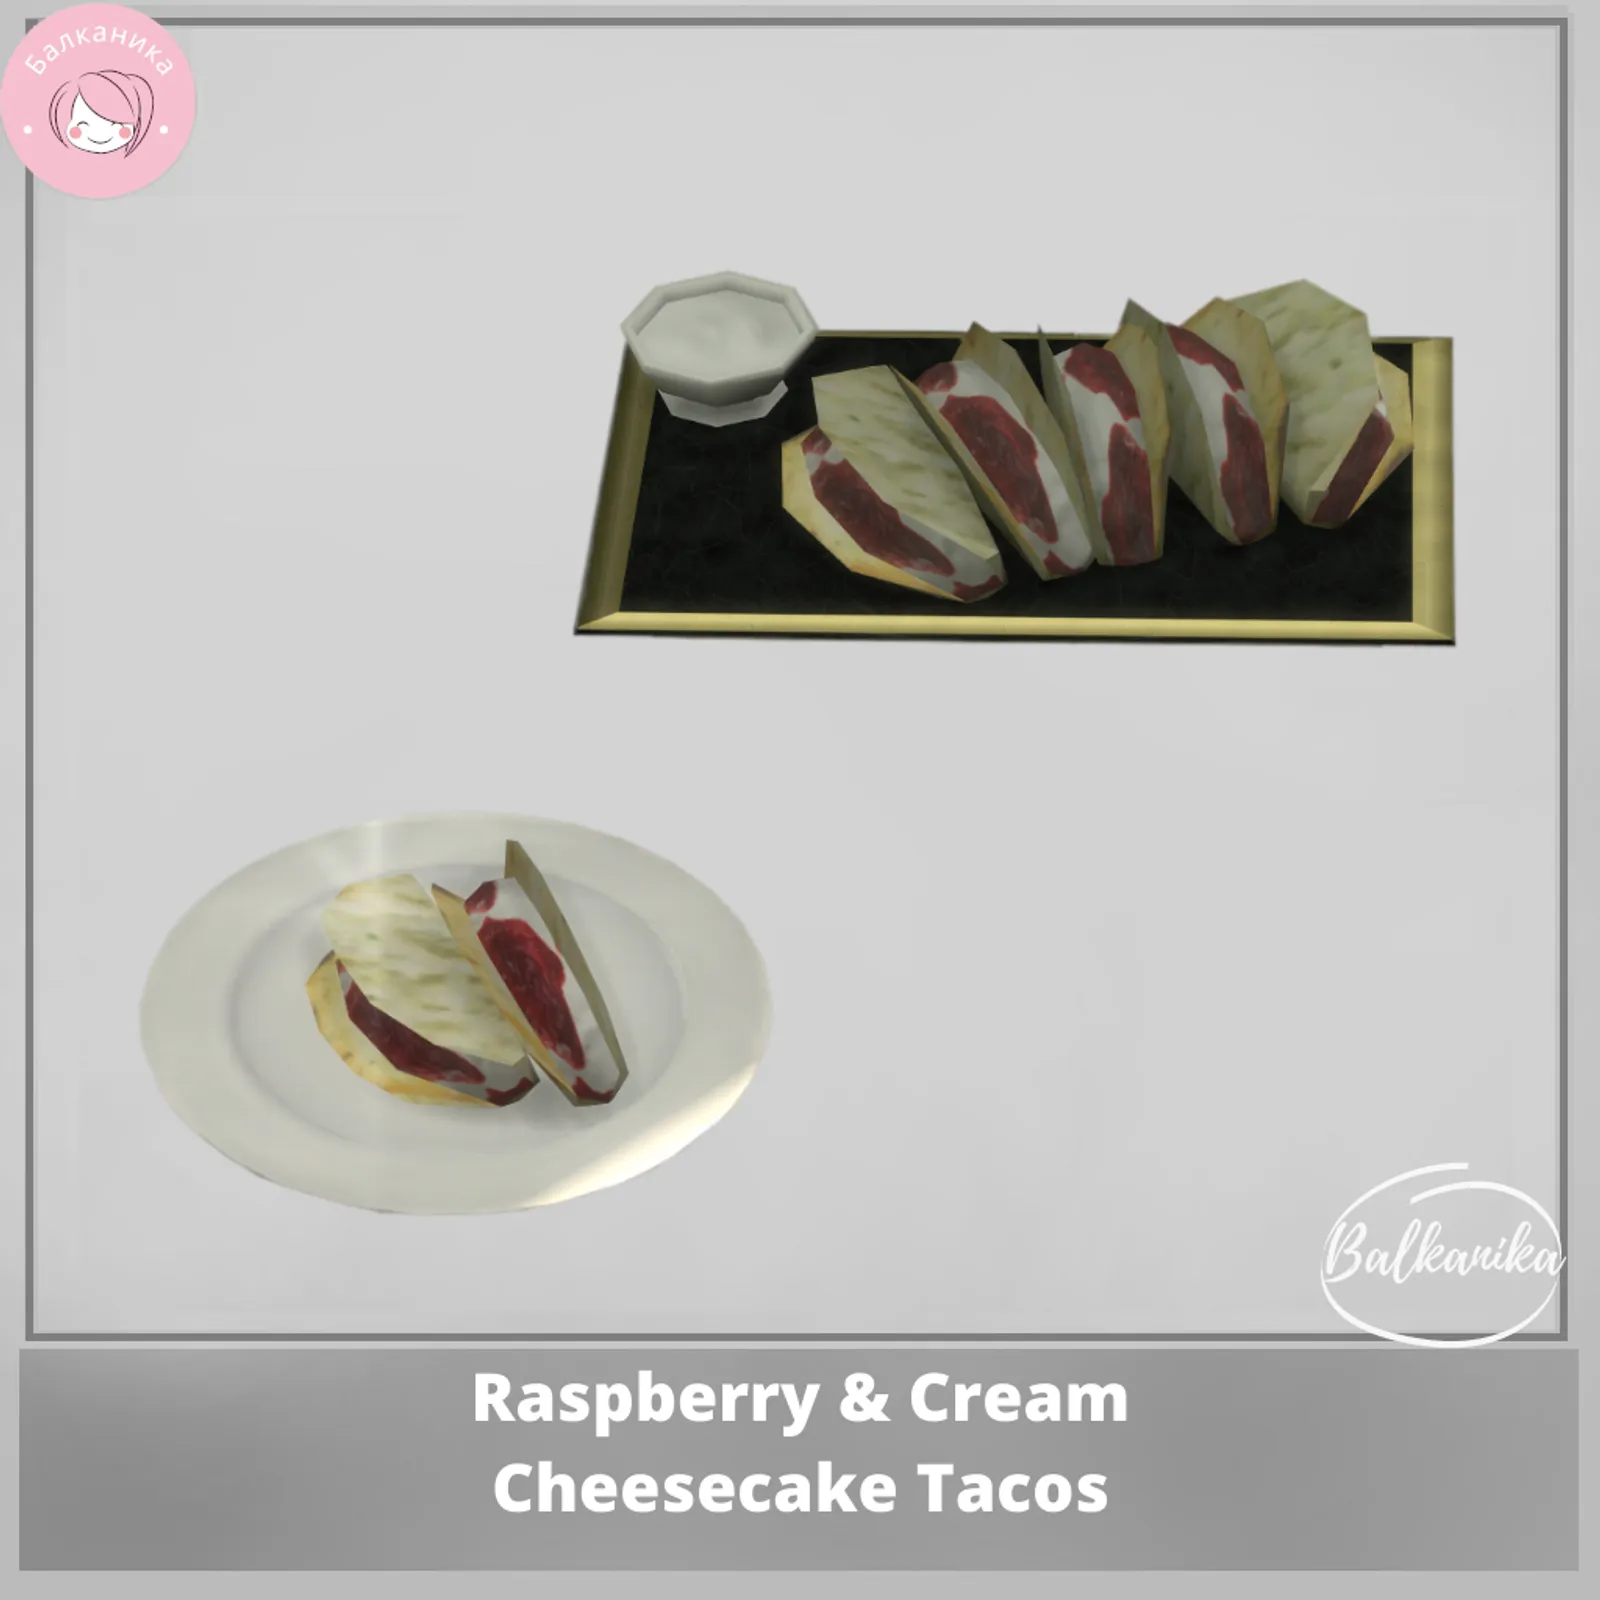 Raspberry & Cream Cheesecake Tacos